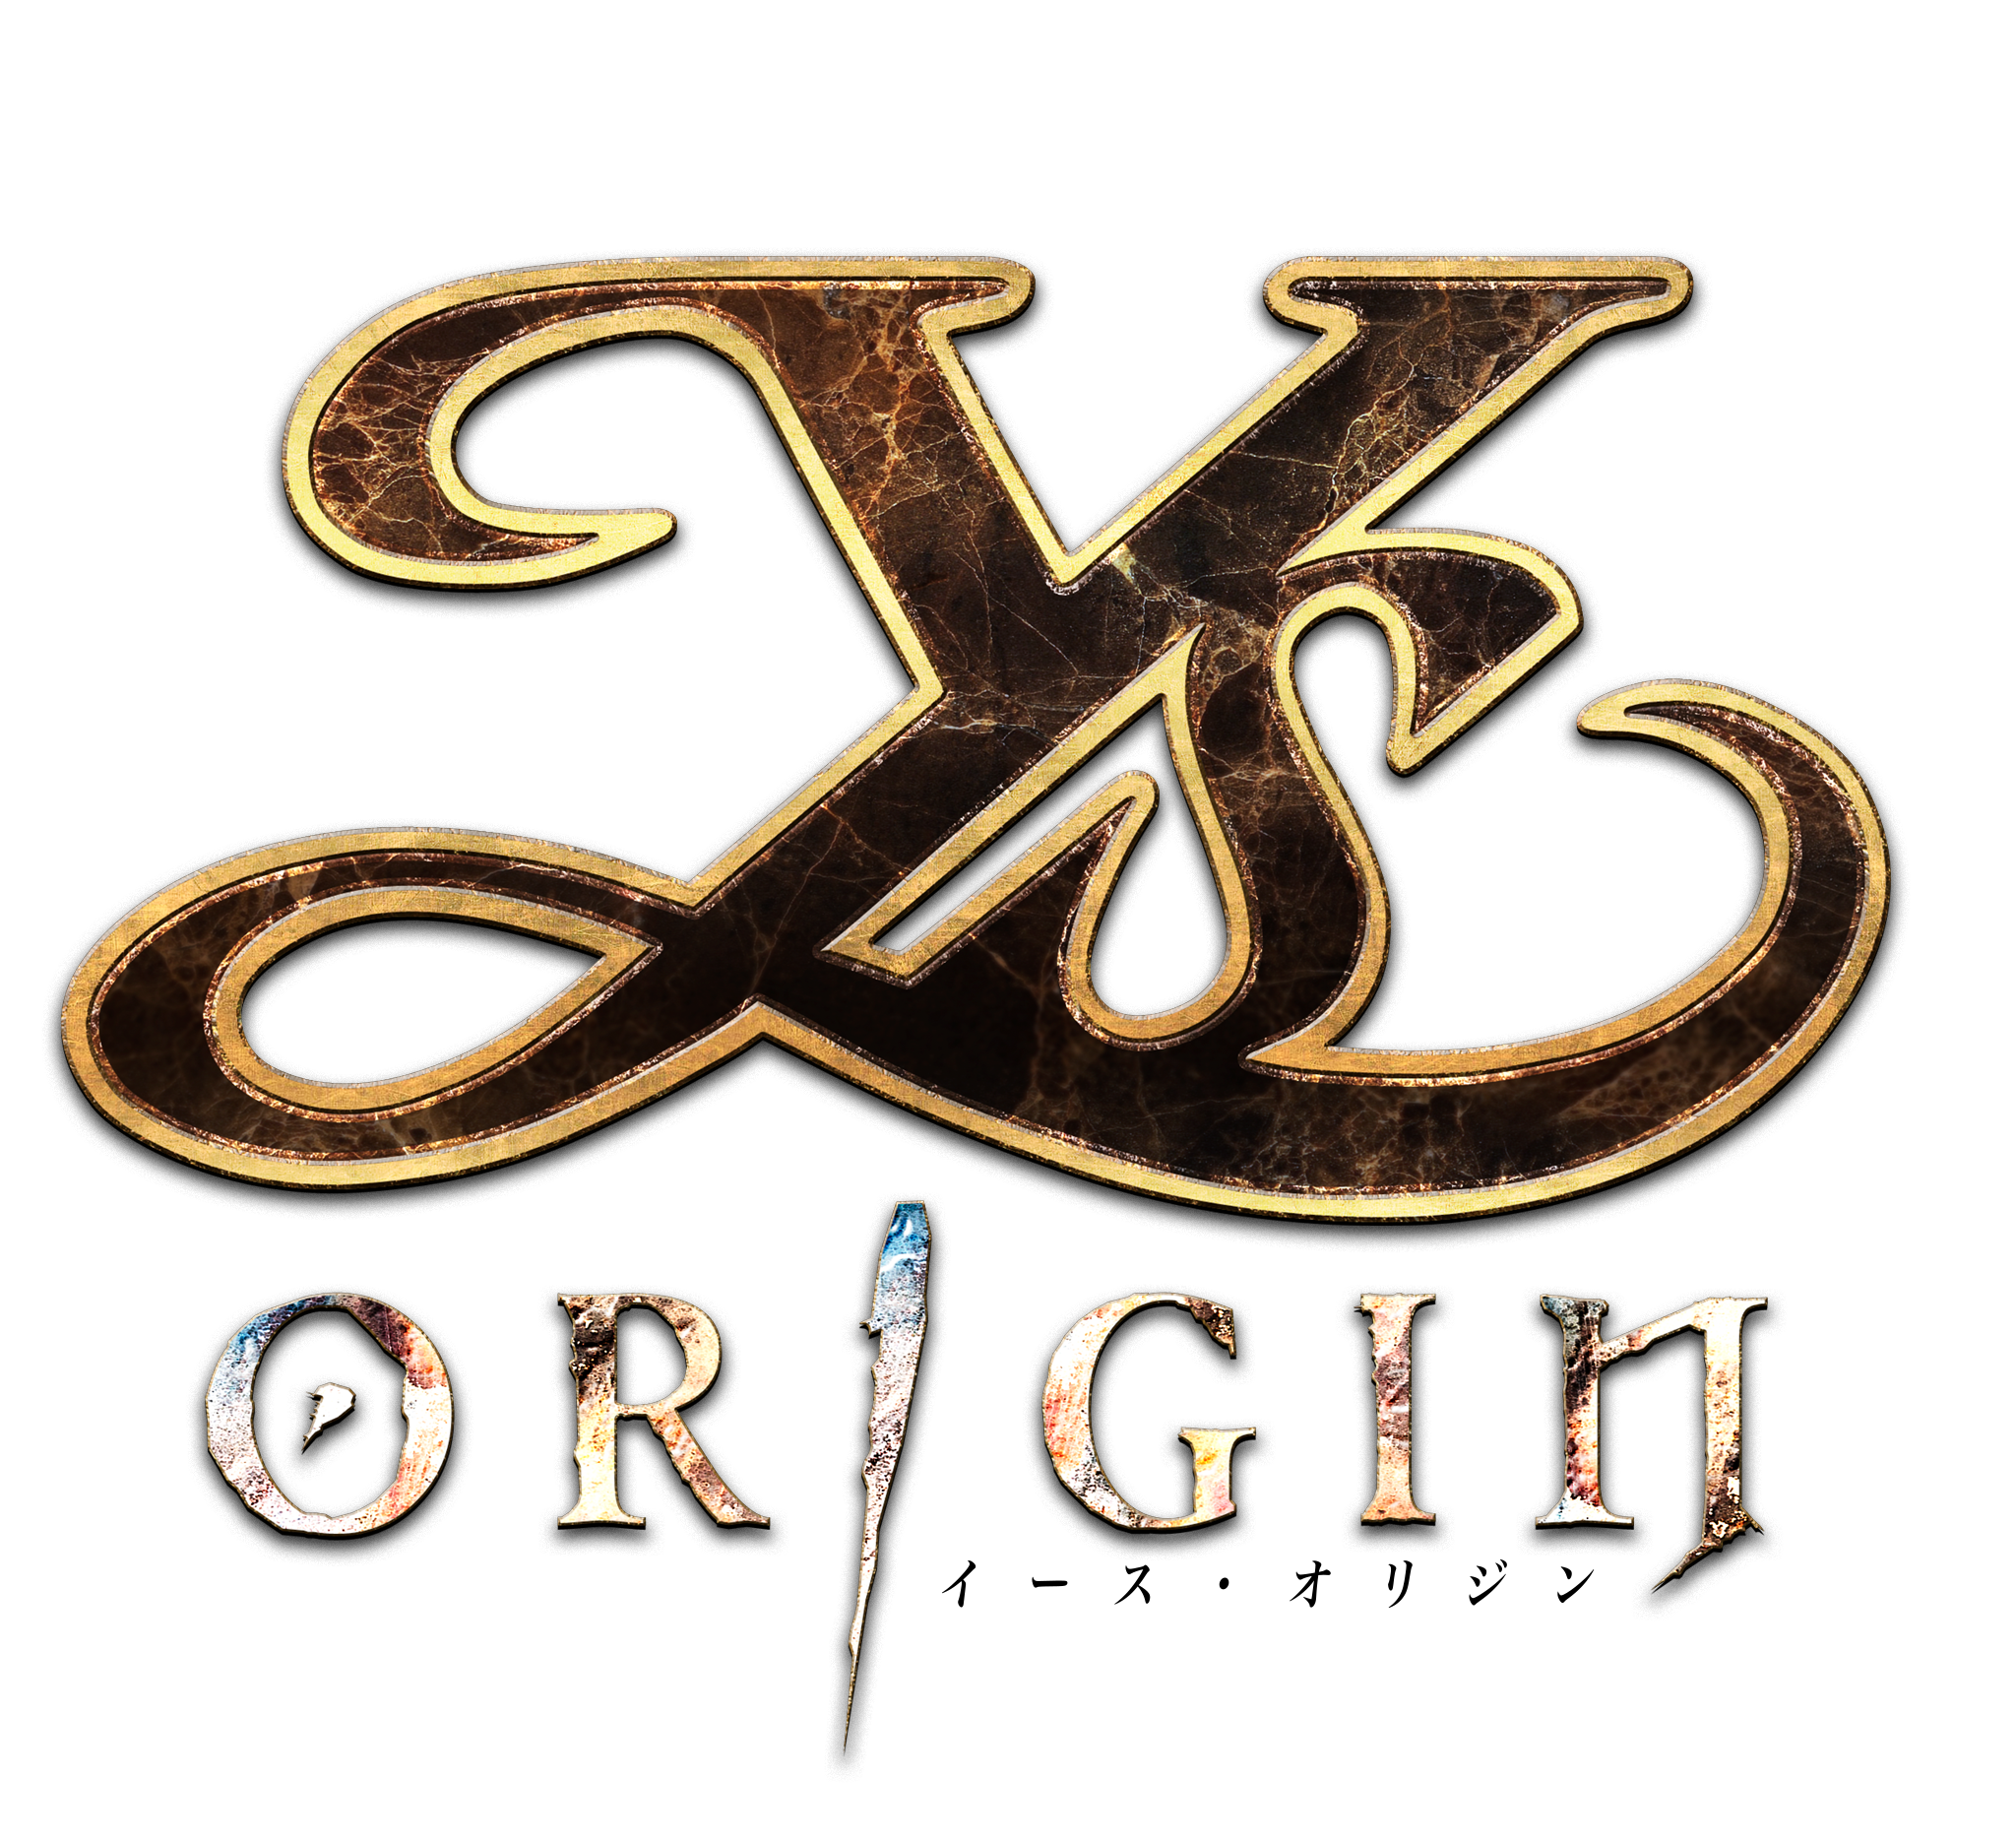 Ys Origin - Logo 2 [logo.png]